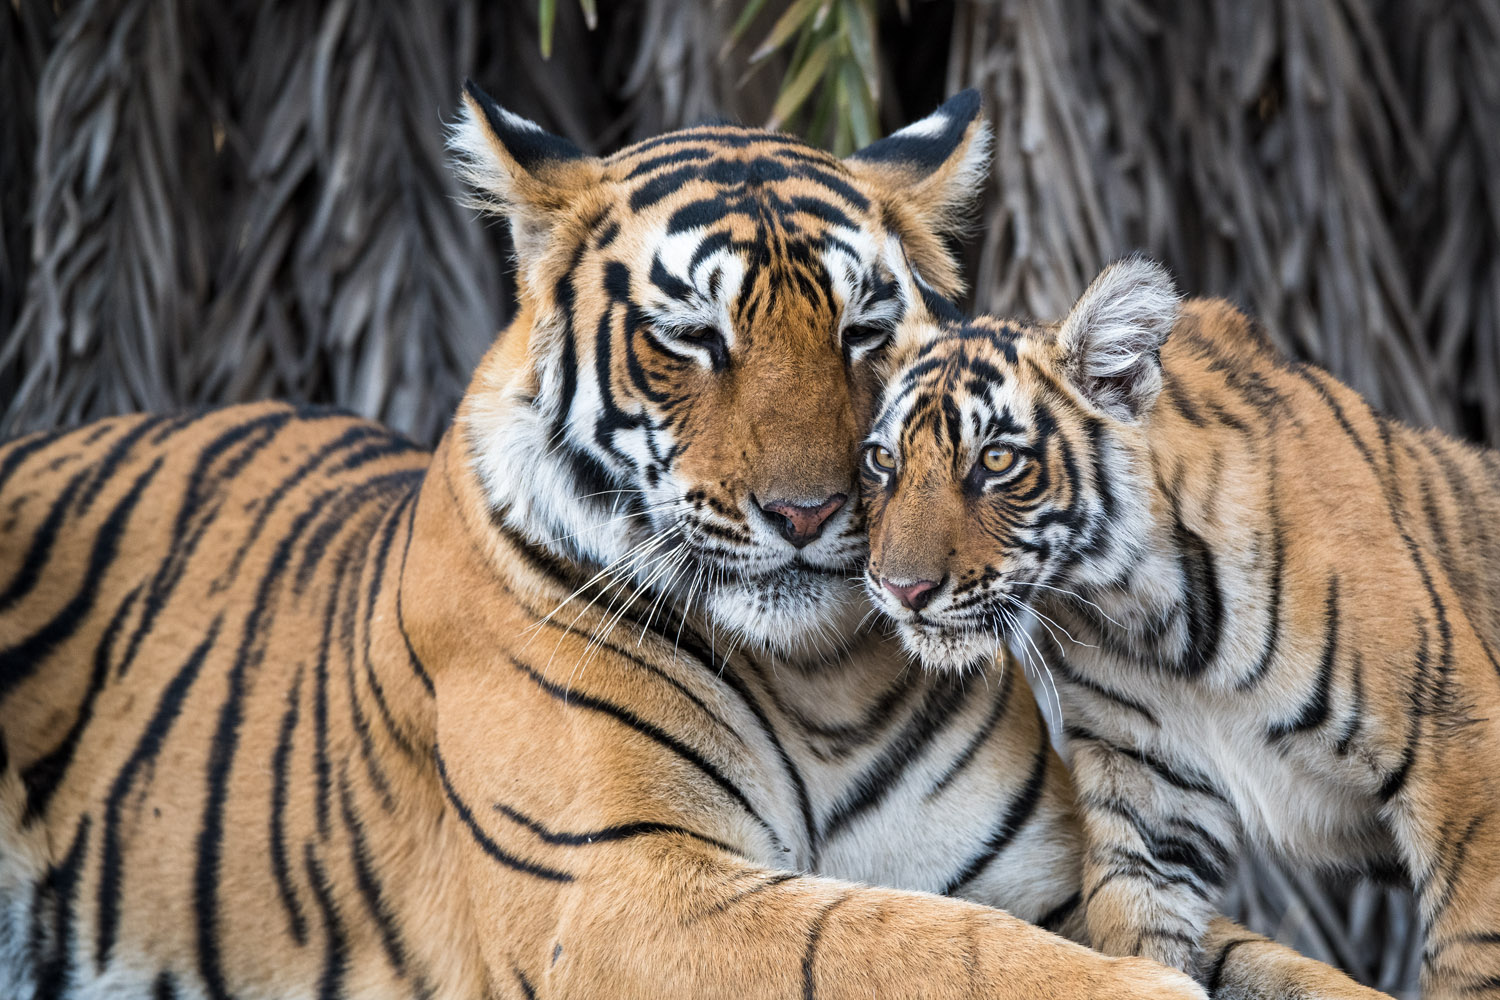 "Bengal tiger mother interacting with cub, Ranthambhore National Park, Rajasthan, India"